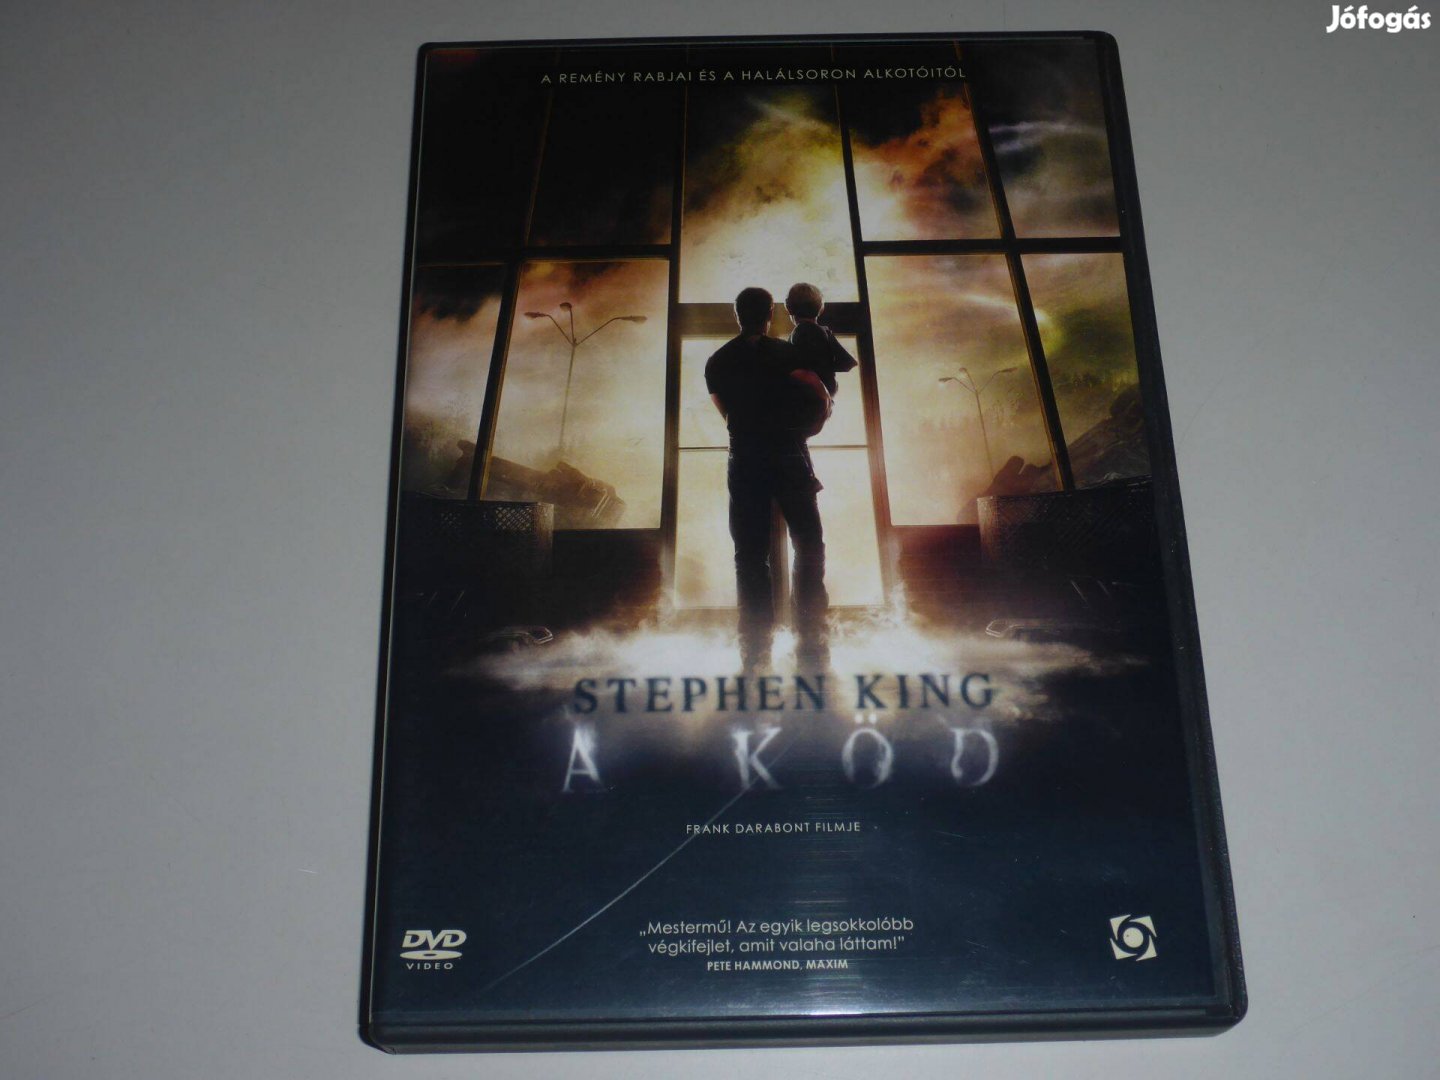 A köd (Stephen King 2007) DVD film -